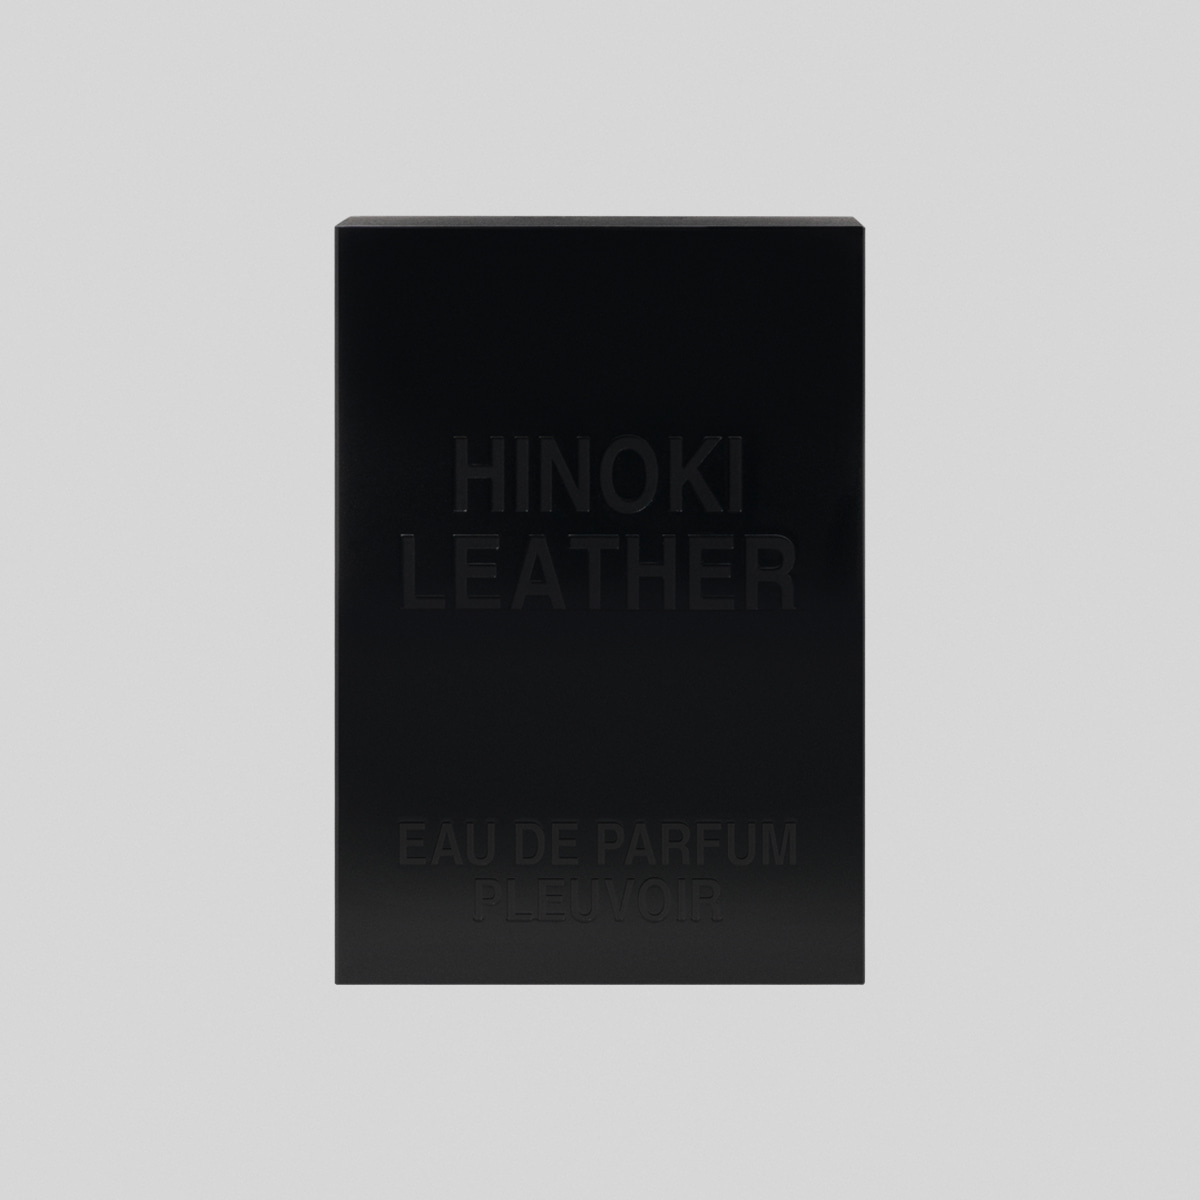 Hinoki Leather Eau De Parfum 50mL히노끼 레더 오 드 퍼퓸 50mL